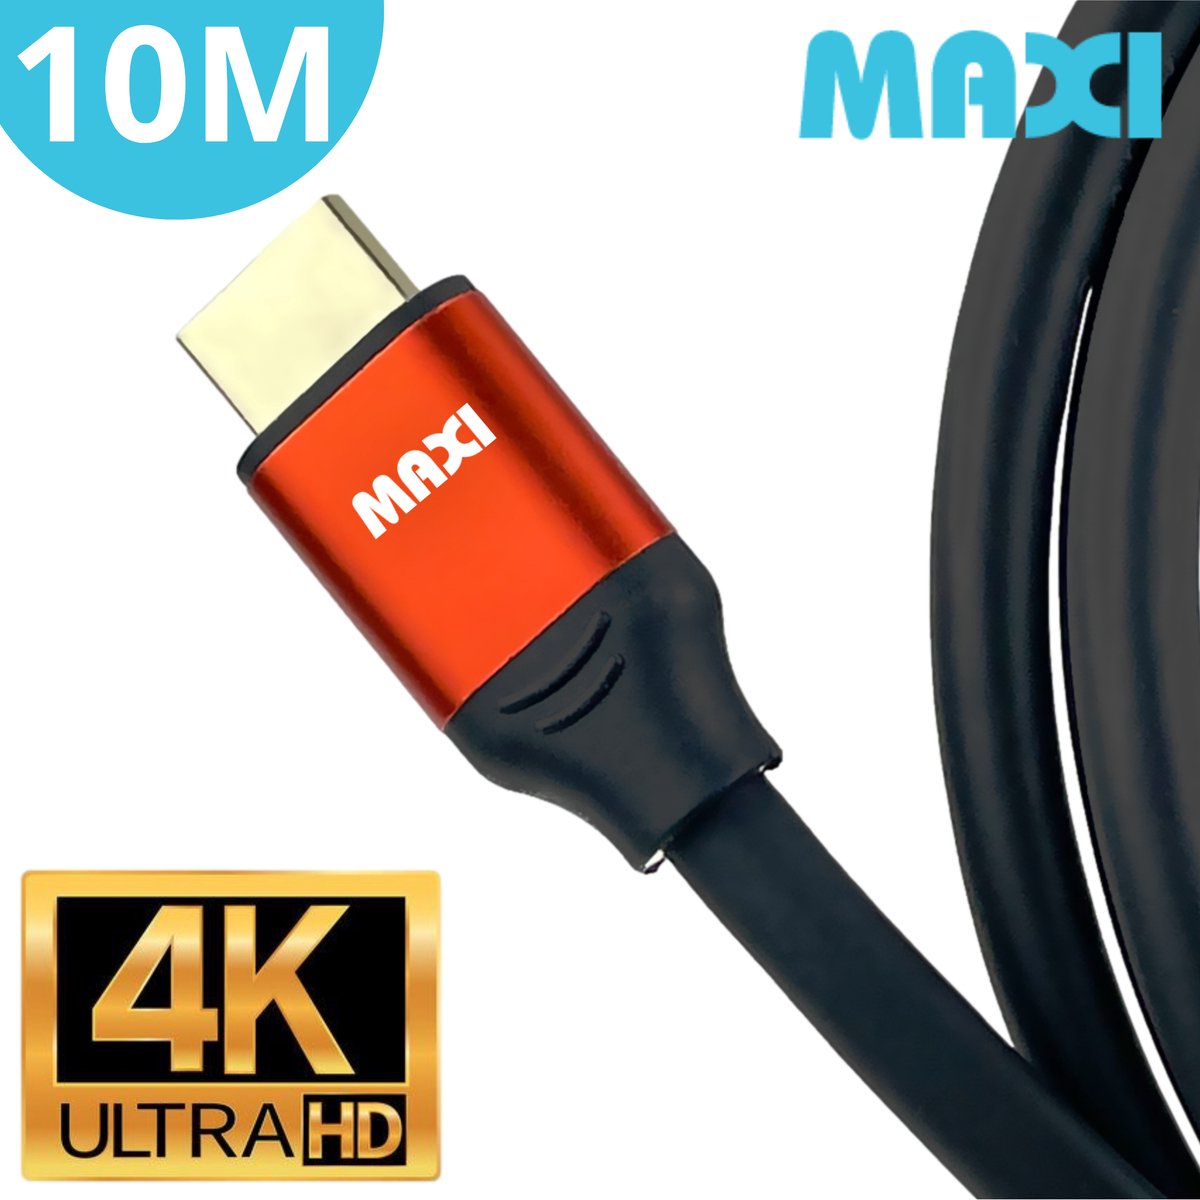 Maximania HDMI kabel 10 meter – Ps5 – Ultra High speed HDMI – HDMI 2.0 - Hdmi naar hdmi - 4K UHD – Xbox - Rood